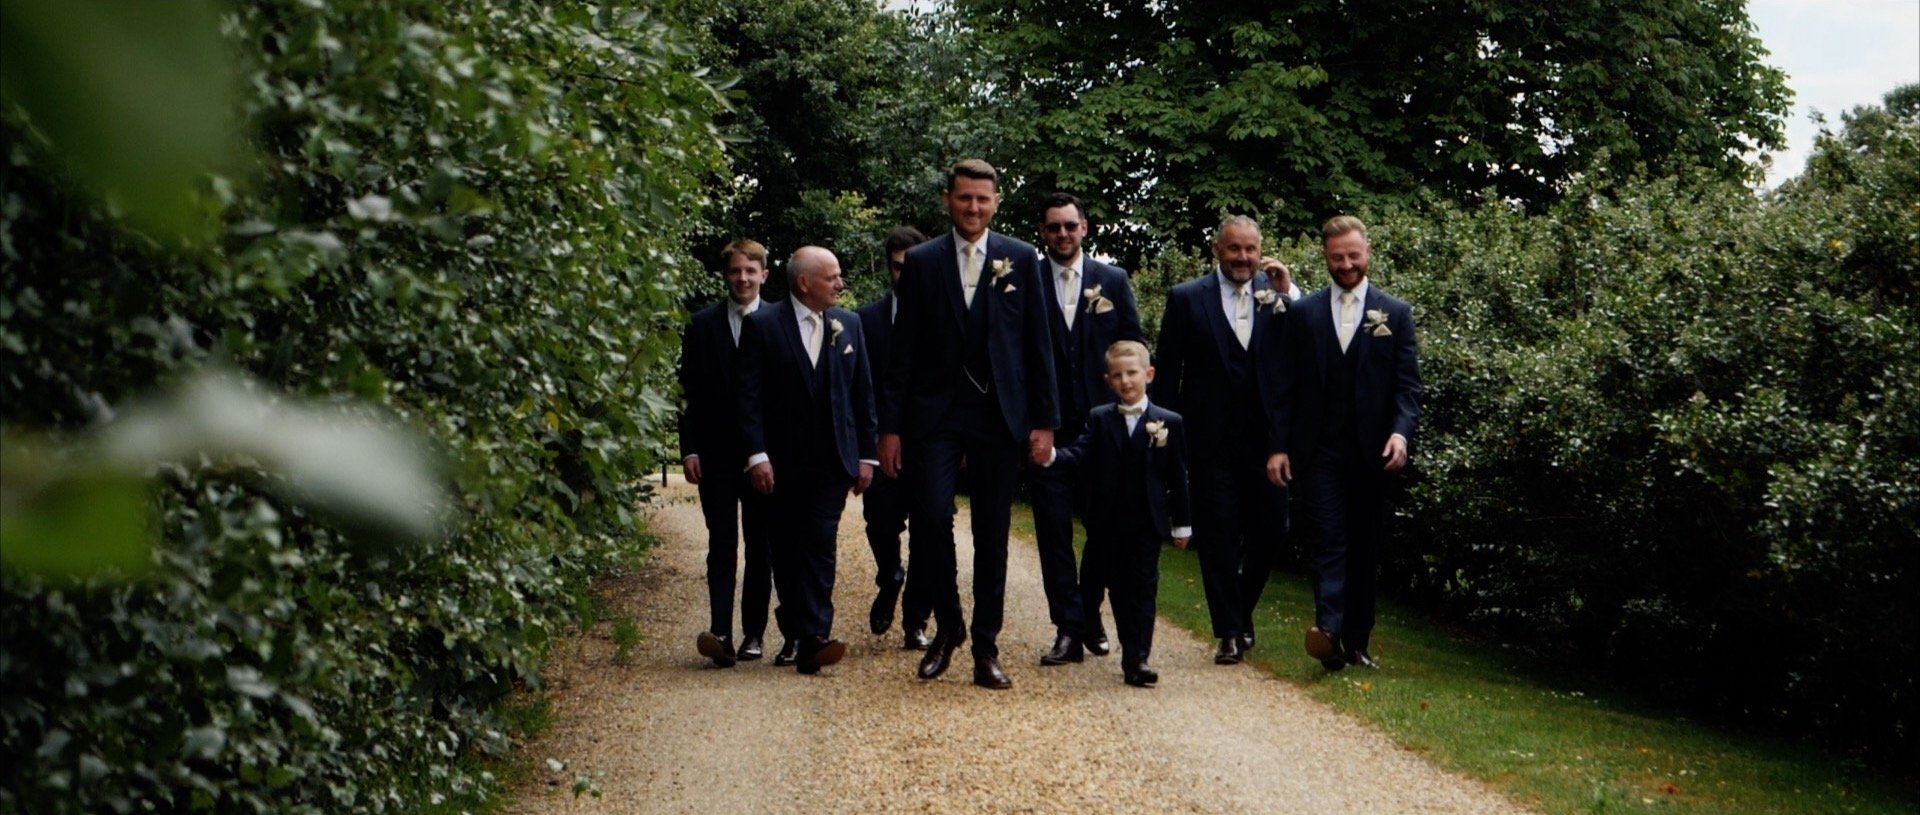 The Groomsmen at Apton Hall wedding video 3 Cheers Media.jpg